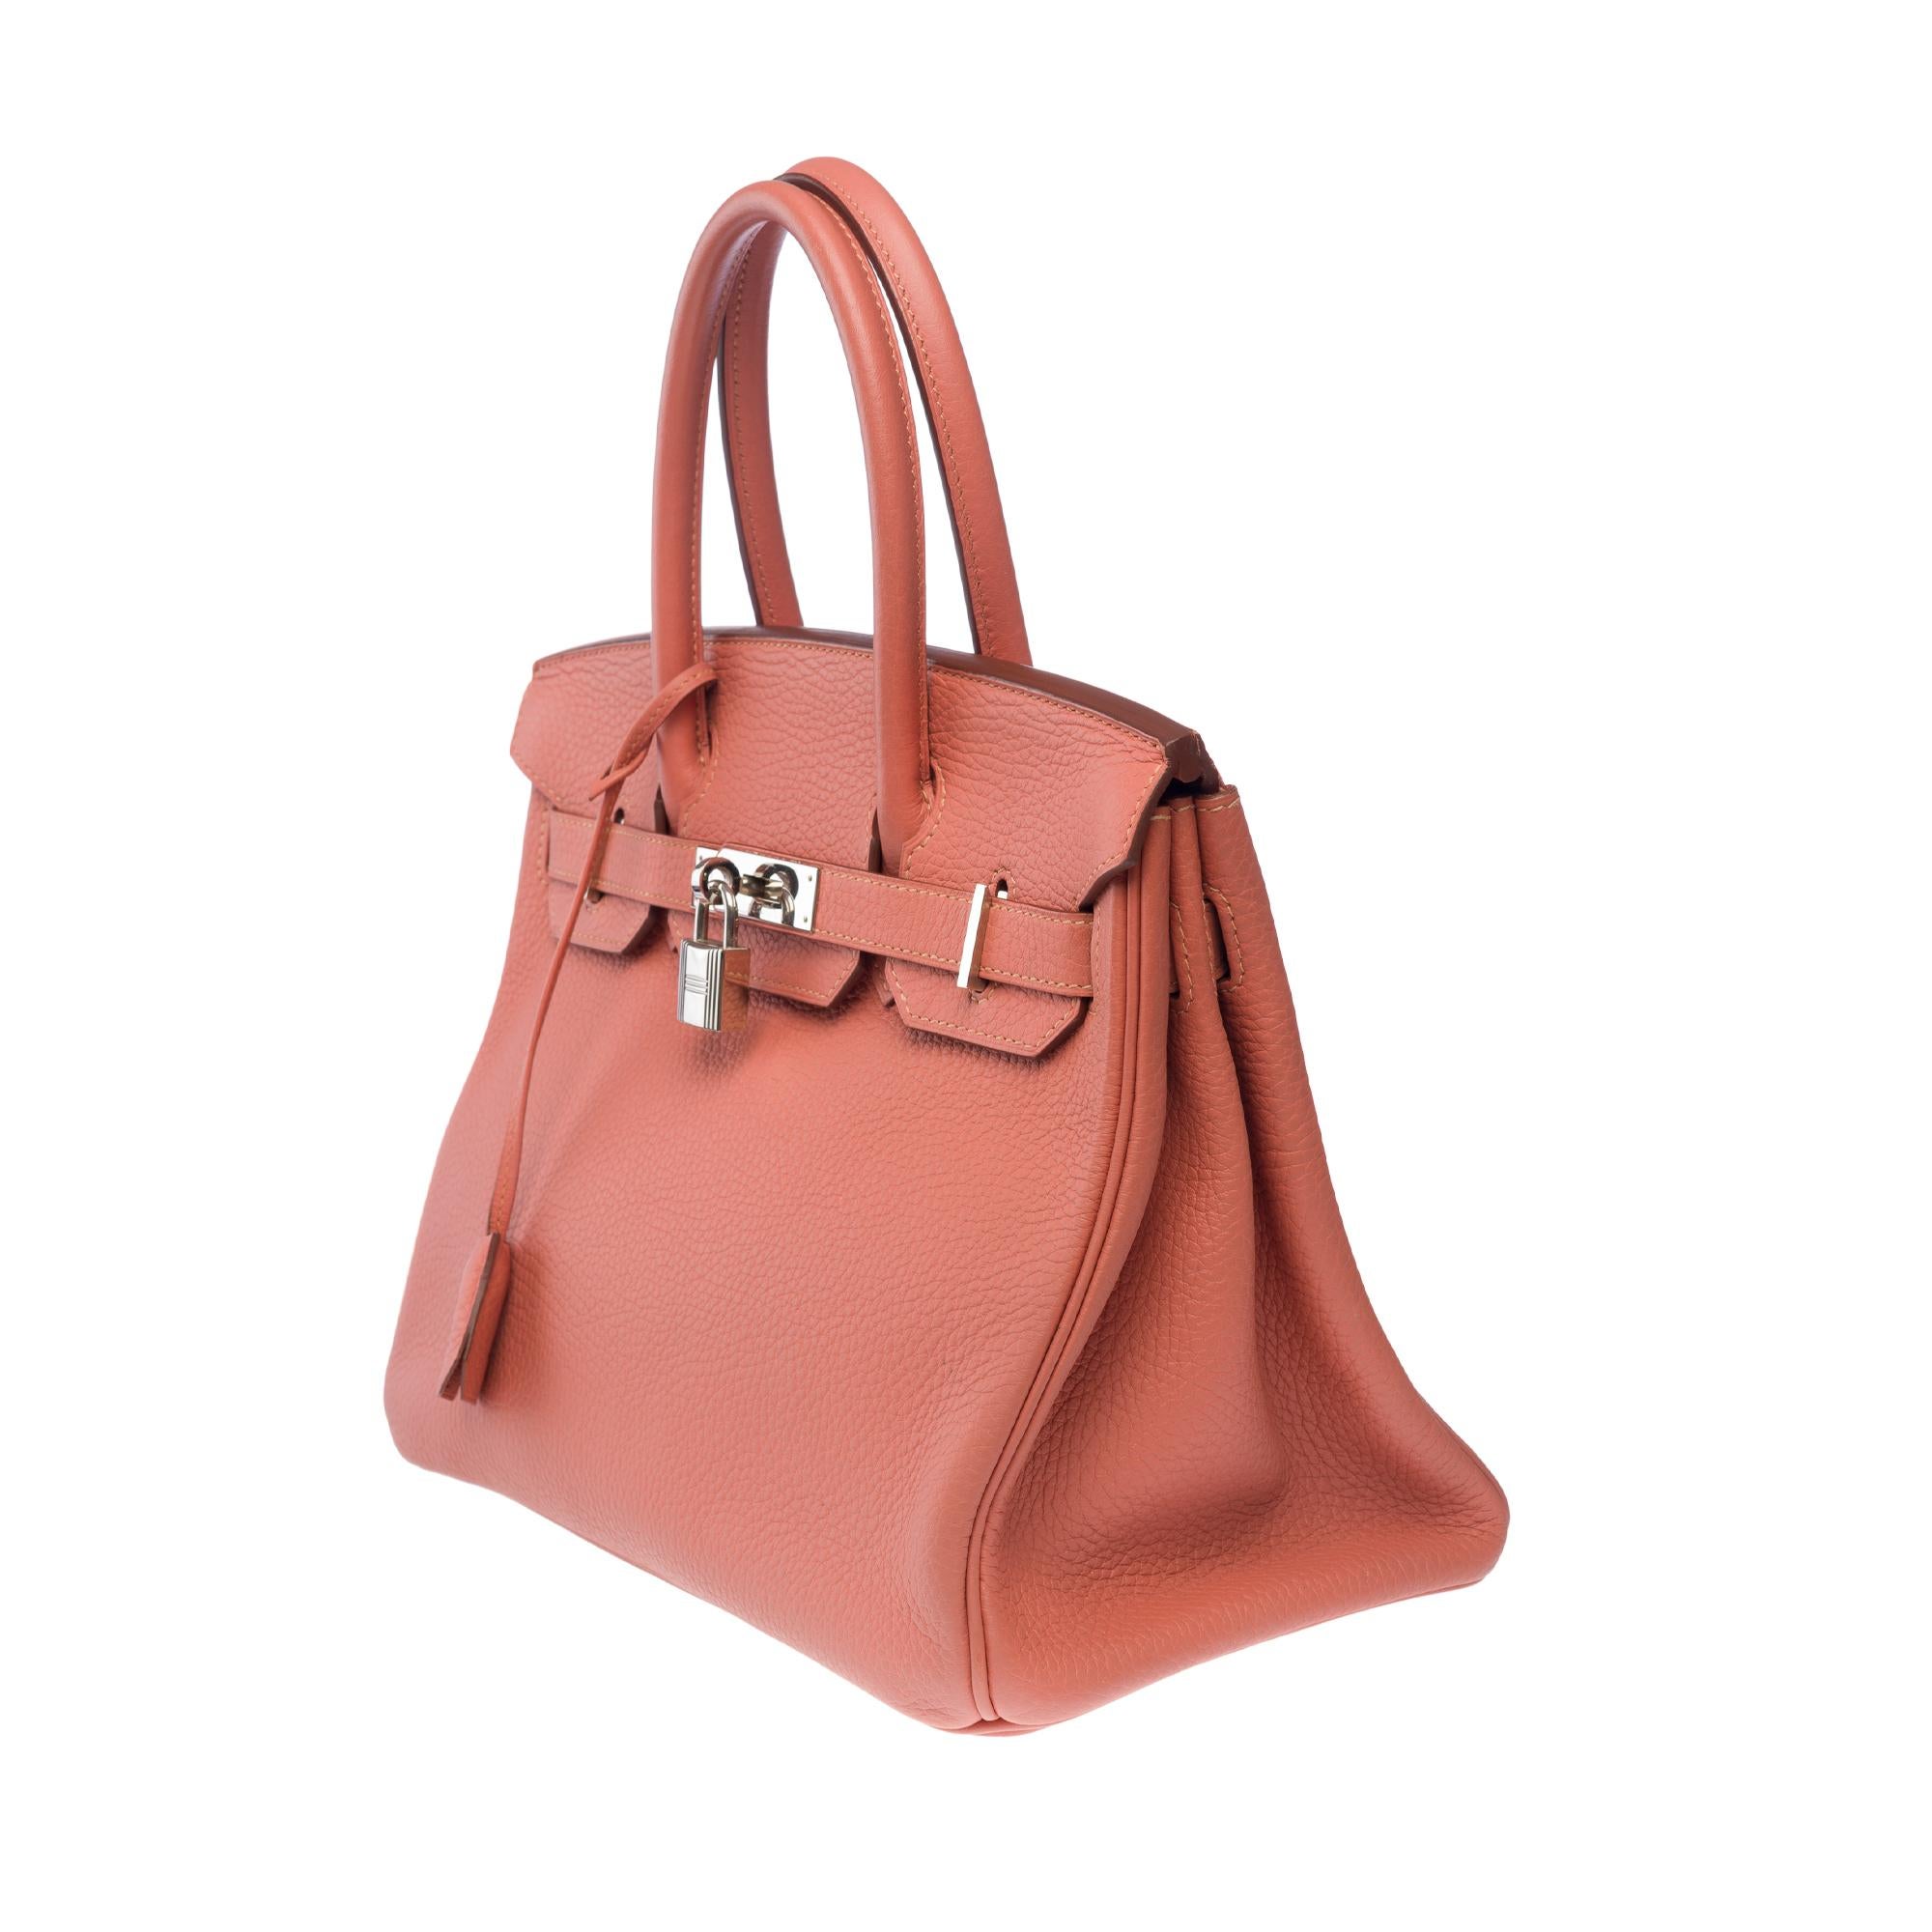 Women's Stunning Hermes Birkin 30 handbag in Rose Tea Togo leather, SHW For Sale